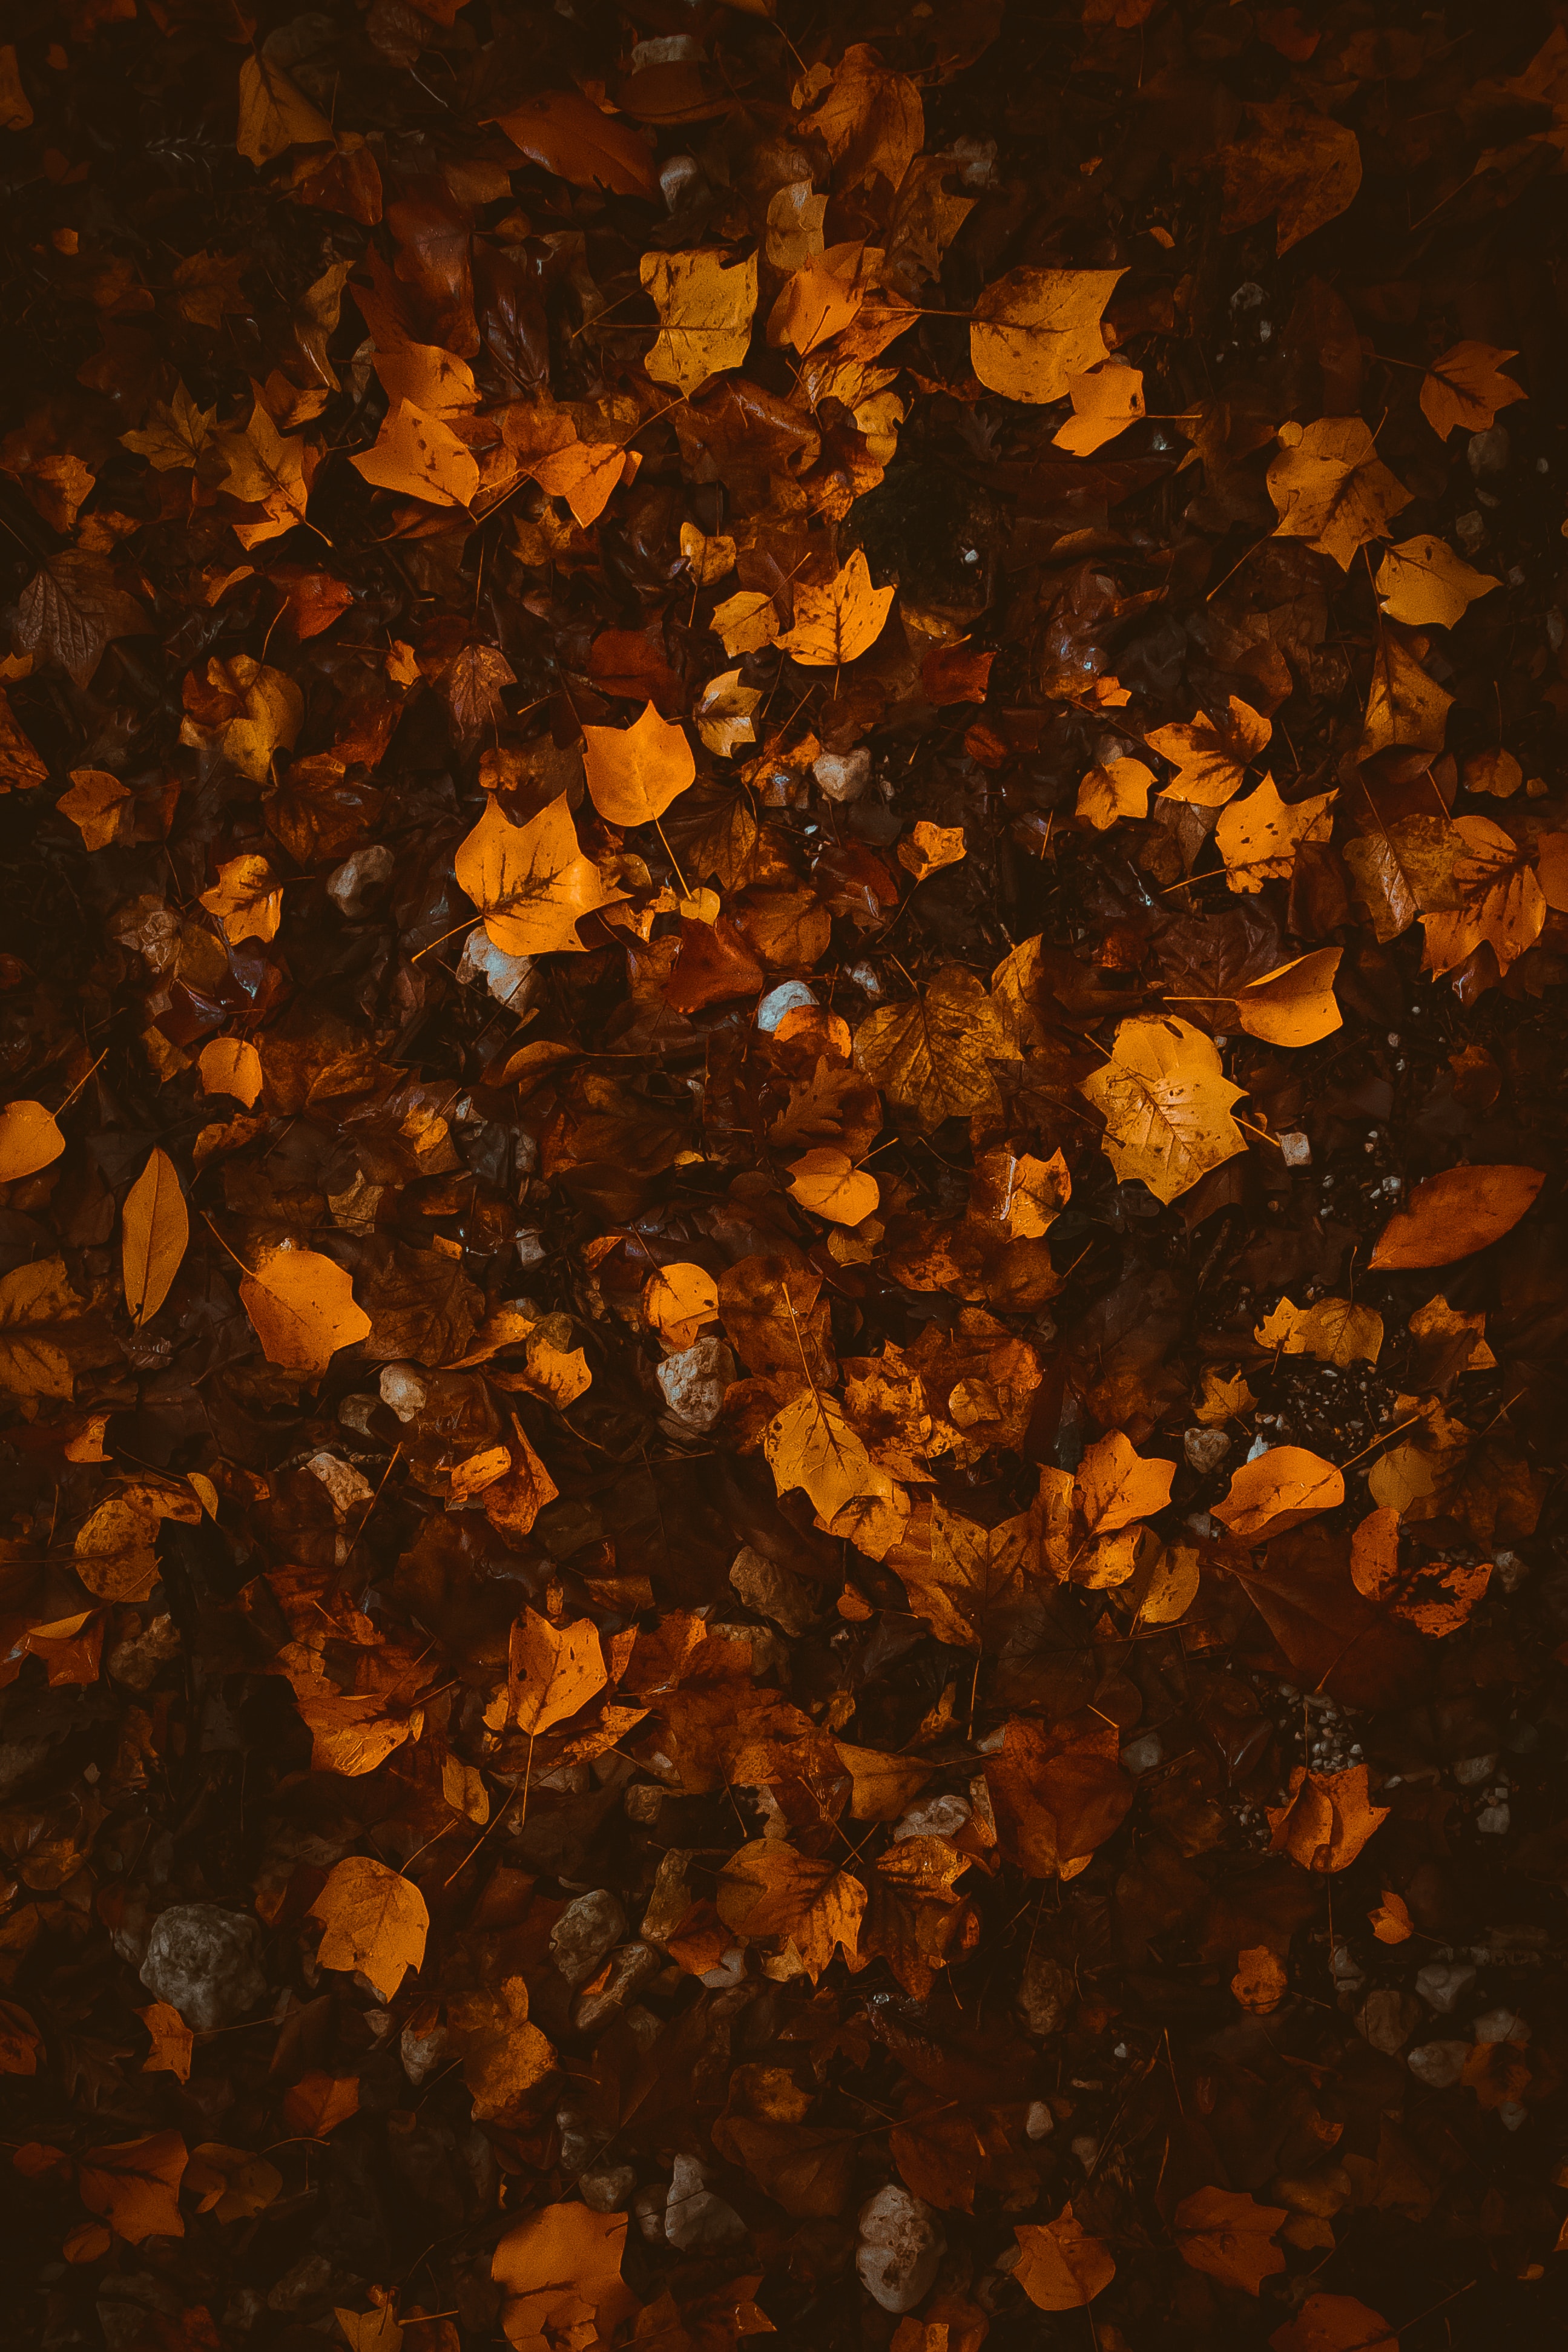 PCデスクトップに自然, 葉, 褐色, 黄色, 木の葉, 堕ちた, 落ちて, 秋画像を無料でダウンロード